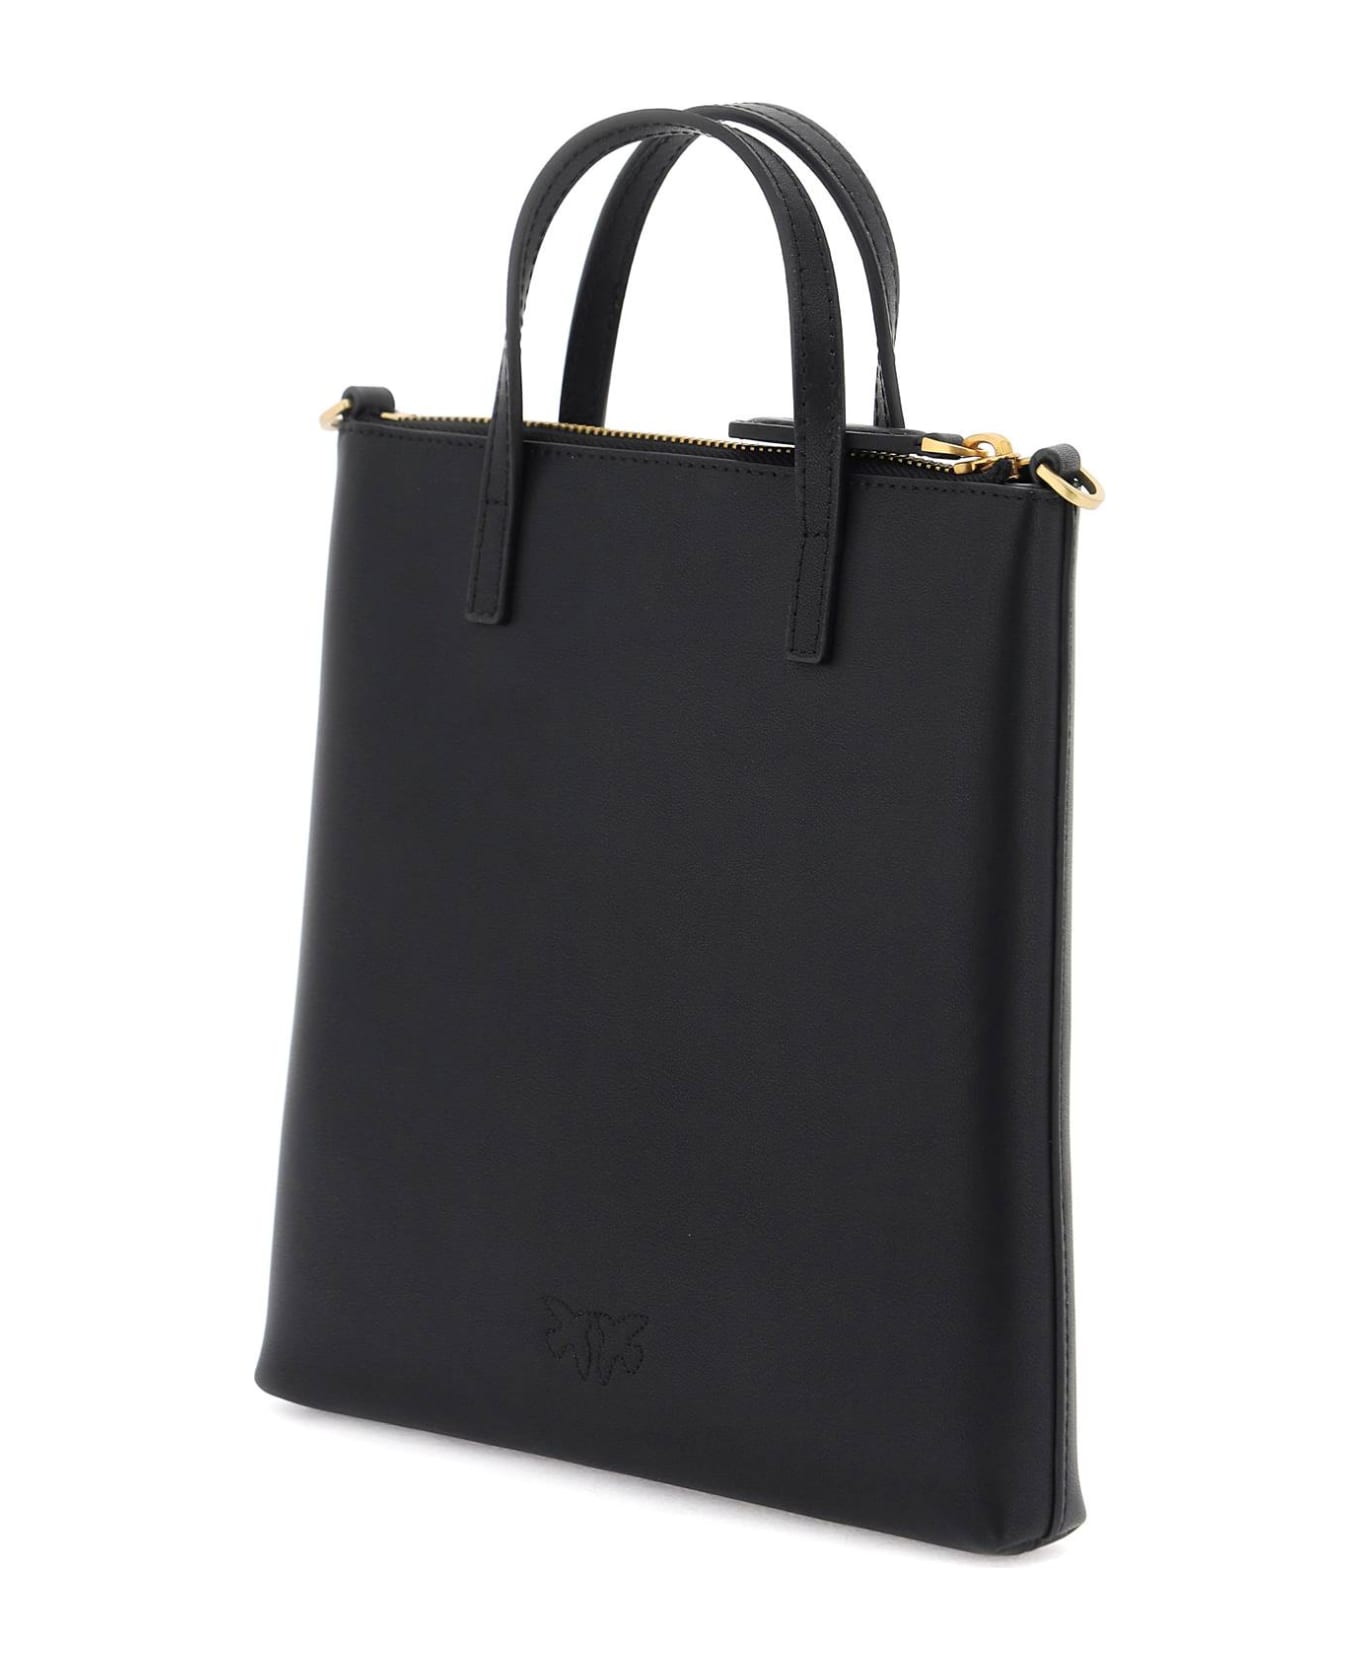 Pinko Leather Mini Tote Bag - NERO ANTIQUE GOLD (Black)